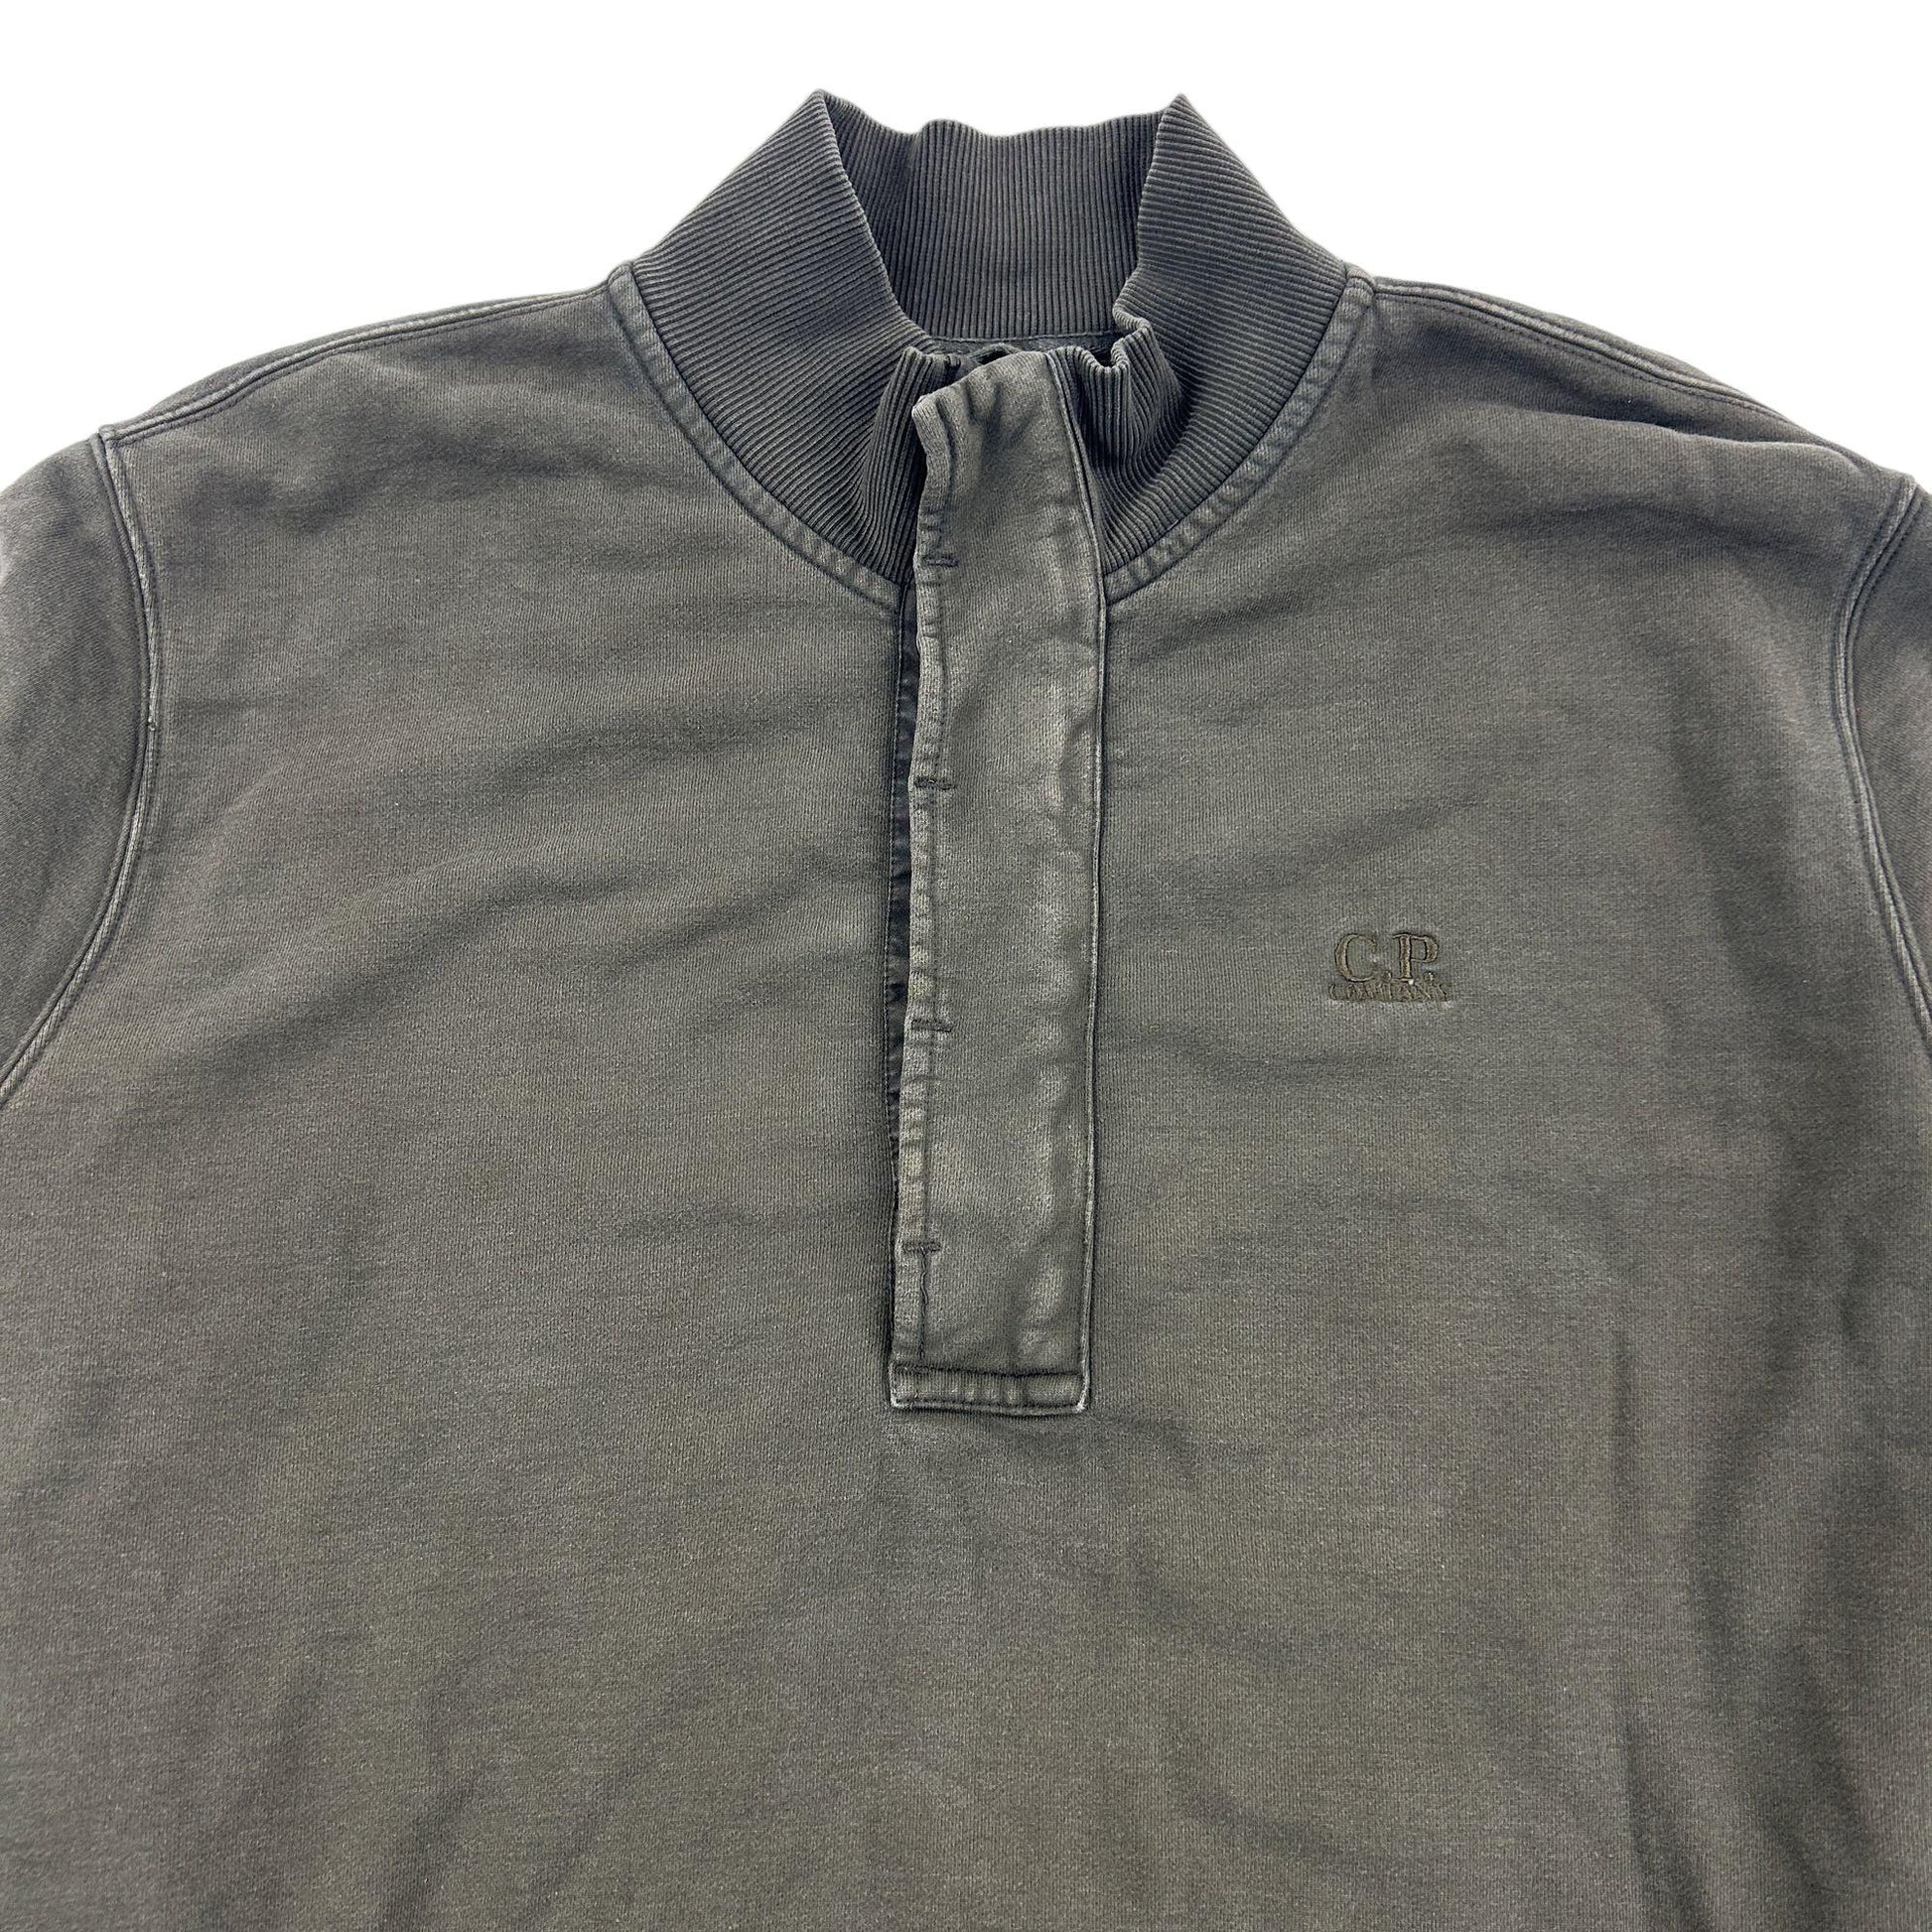 CP Company Quarter Zip Sweatshirt Size XXL - Known Source